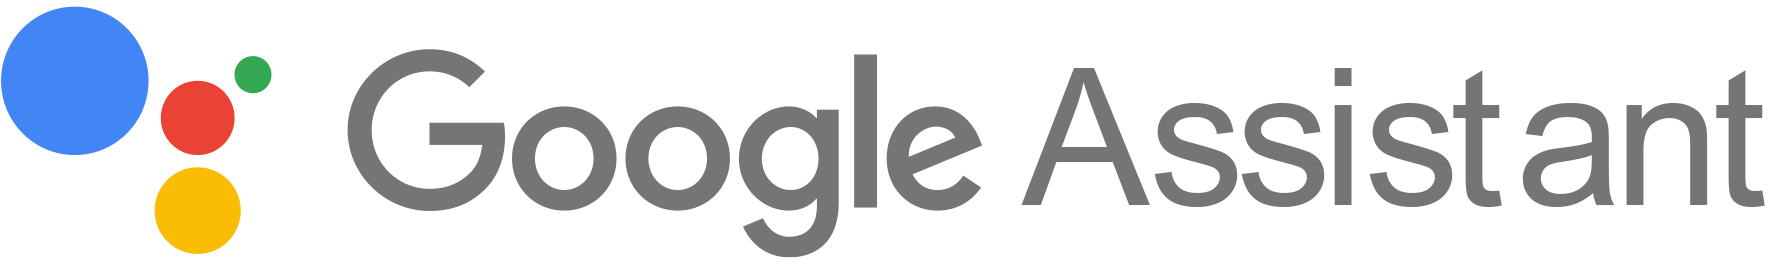 Google Assistant Logo Actions Builder